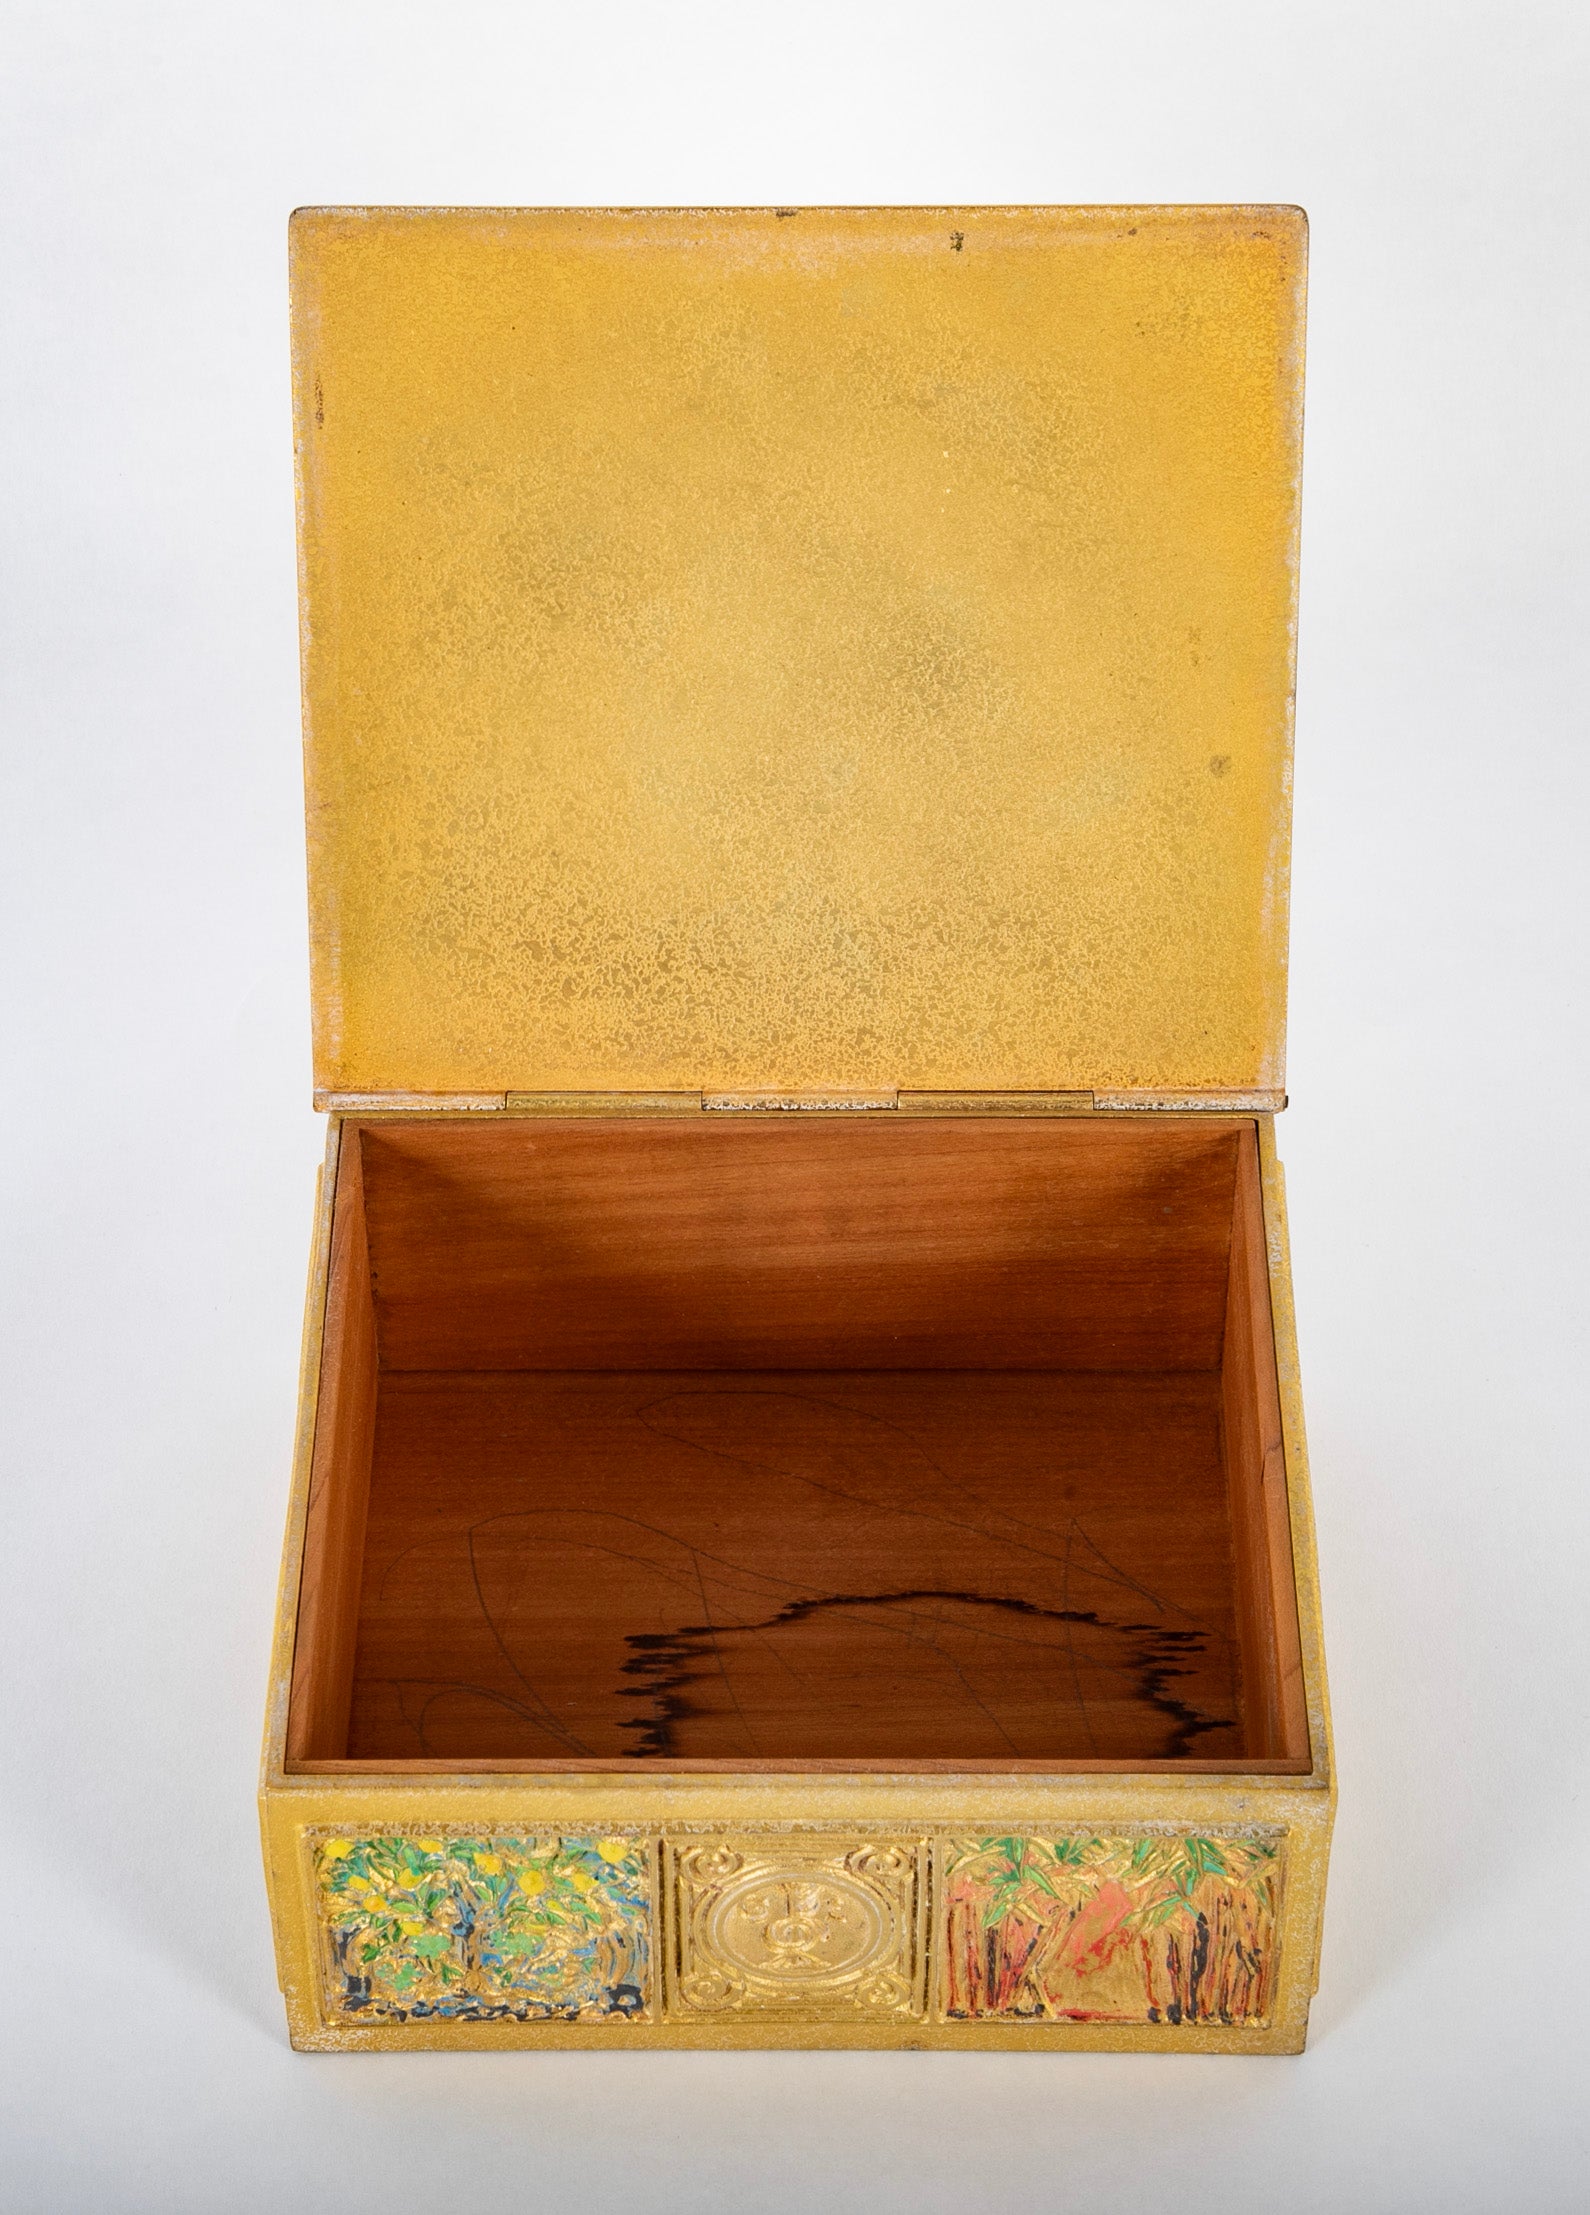 Tiffany Studios Cold Painted Bronze Humidor Cigar Box